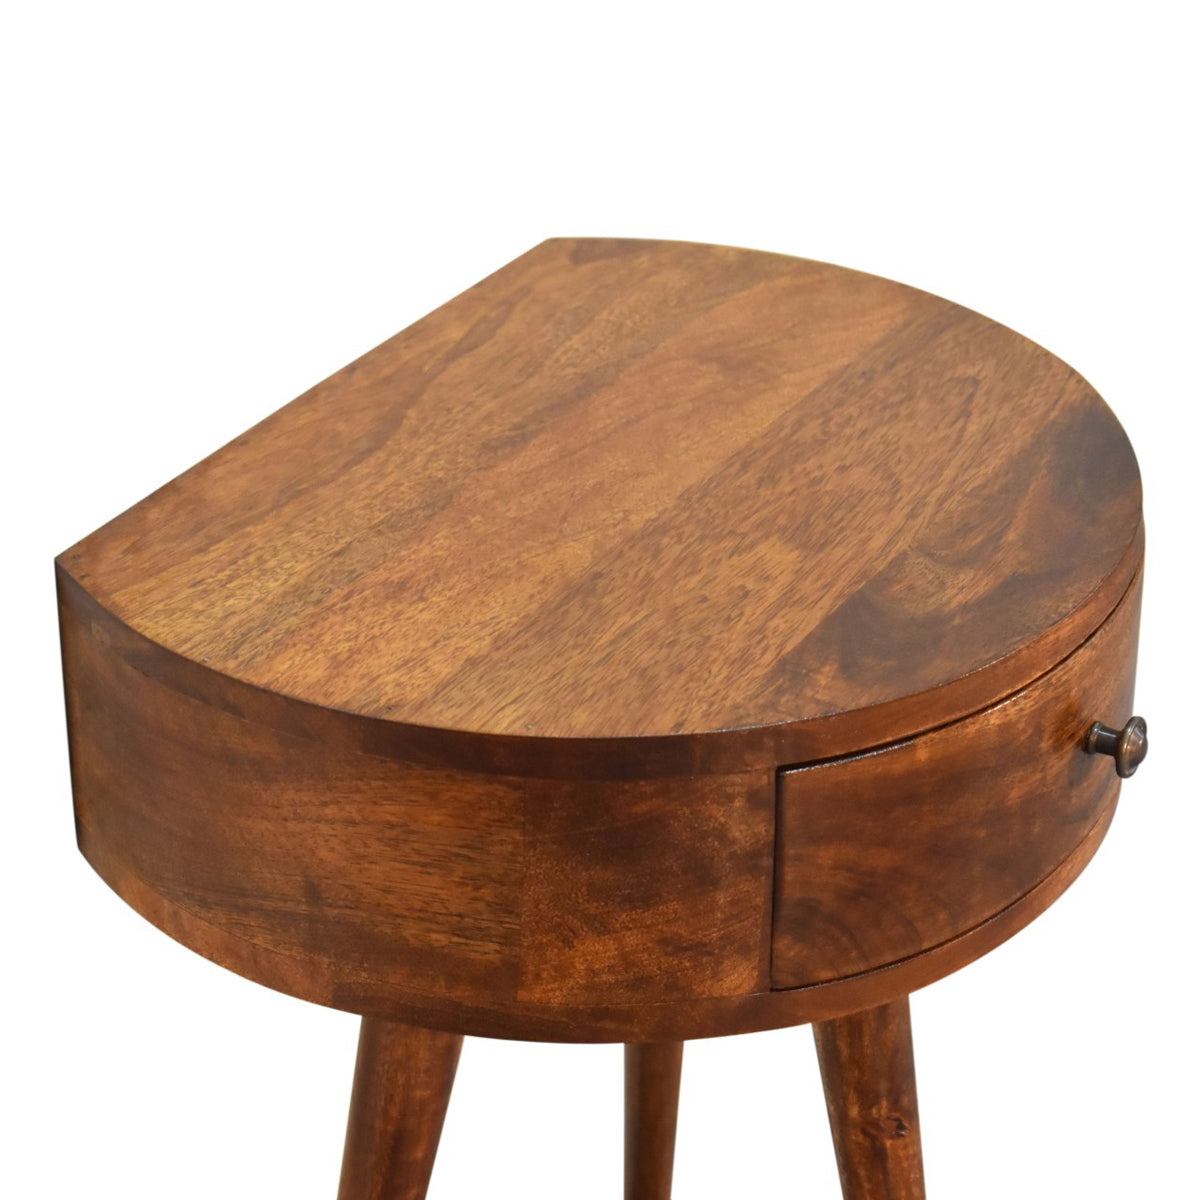 Chestnut Semi Circular Bedside Table - 1 Drawer